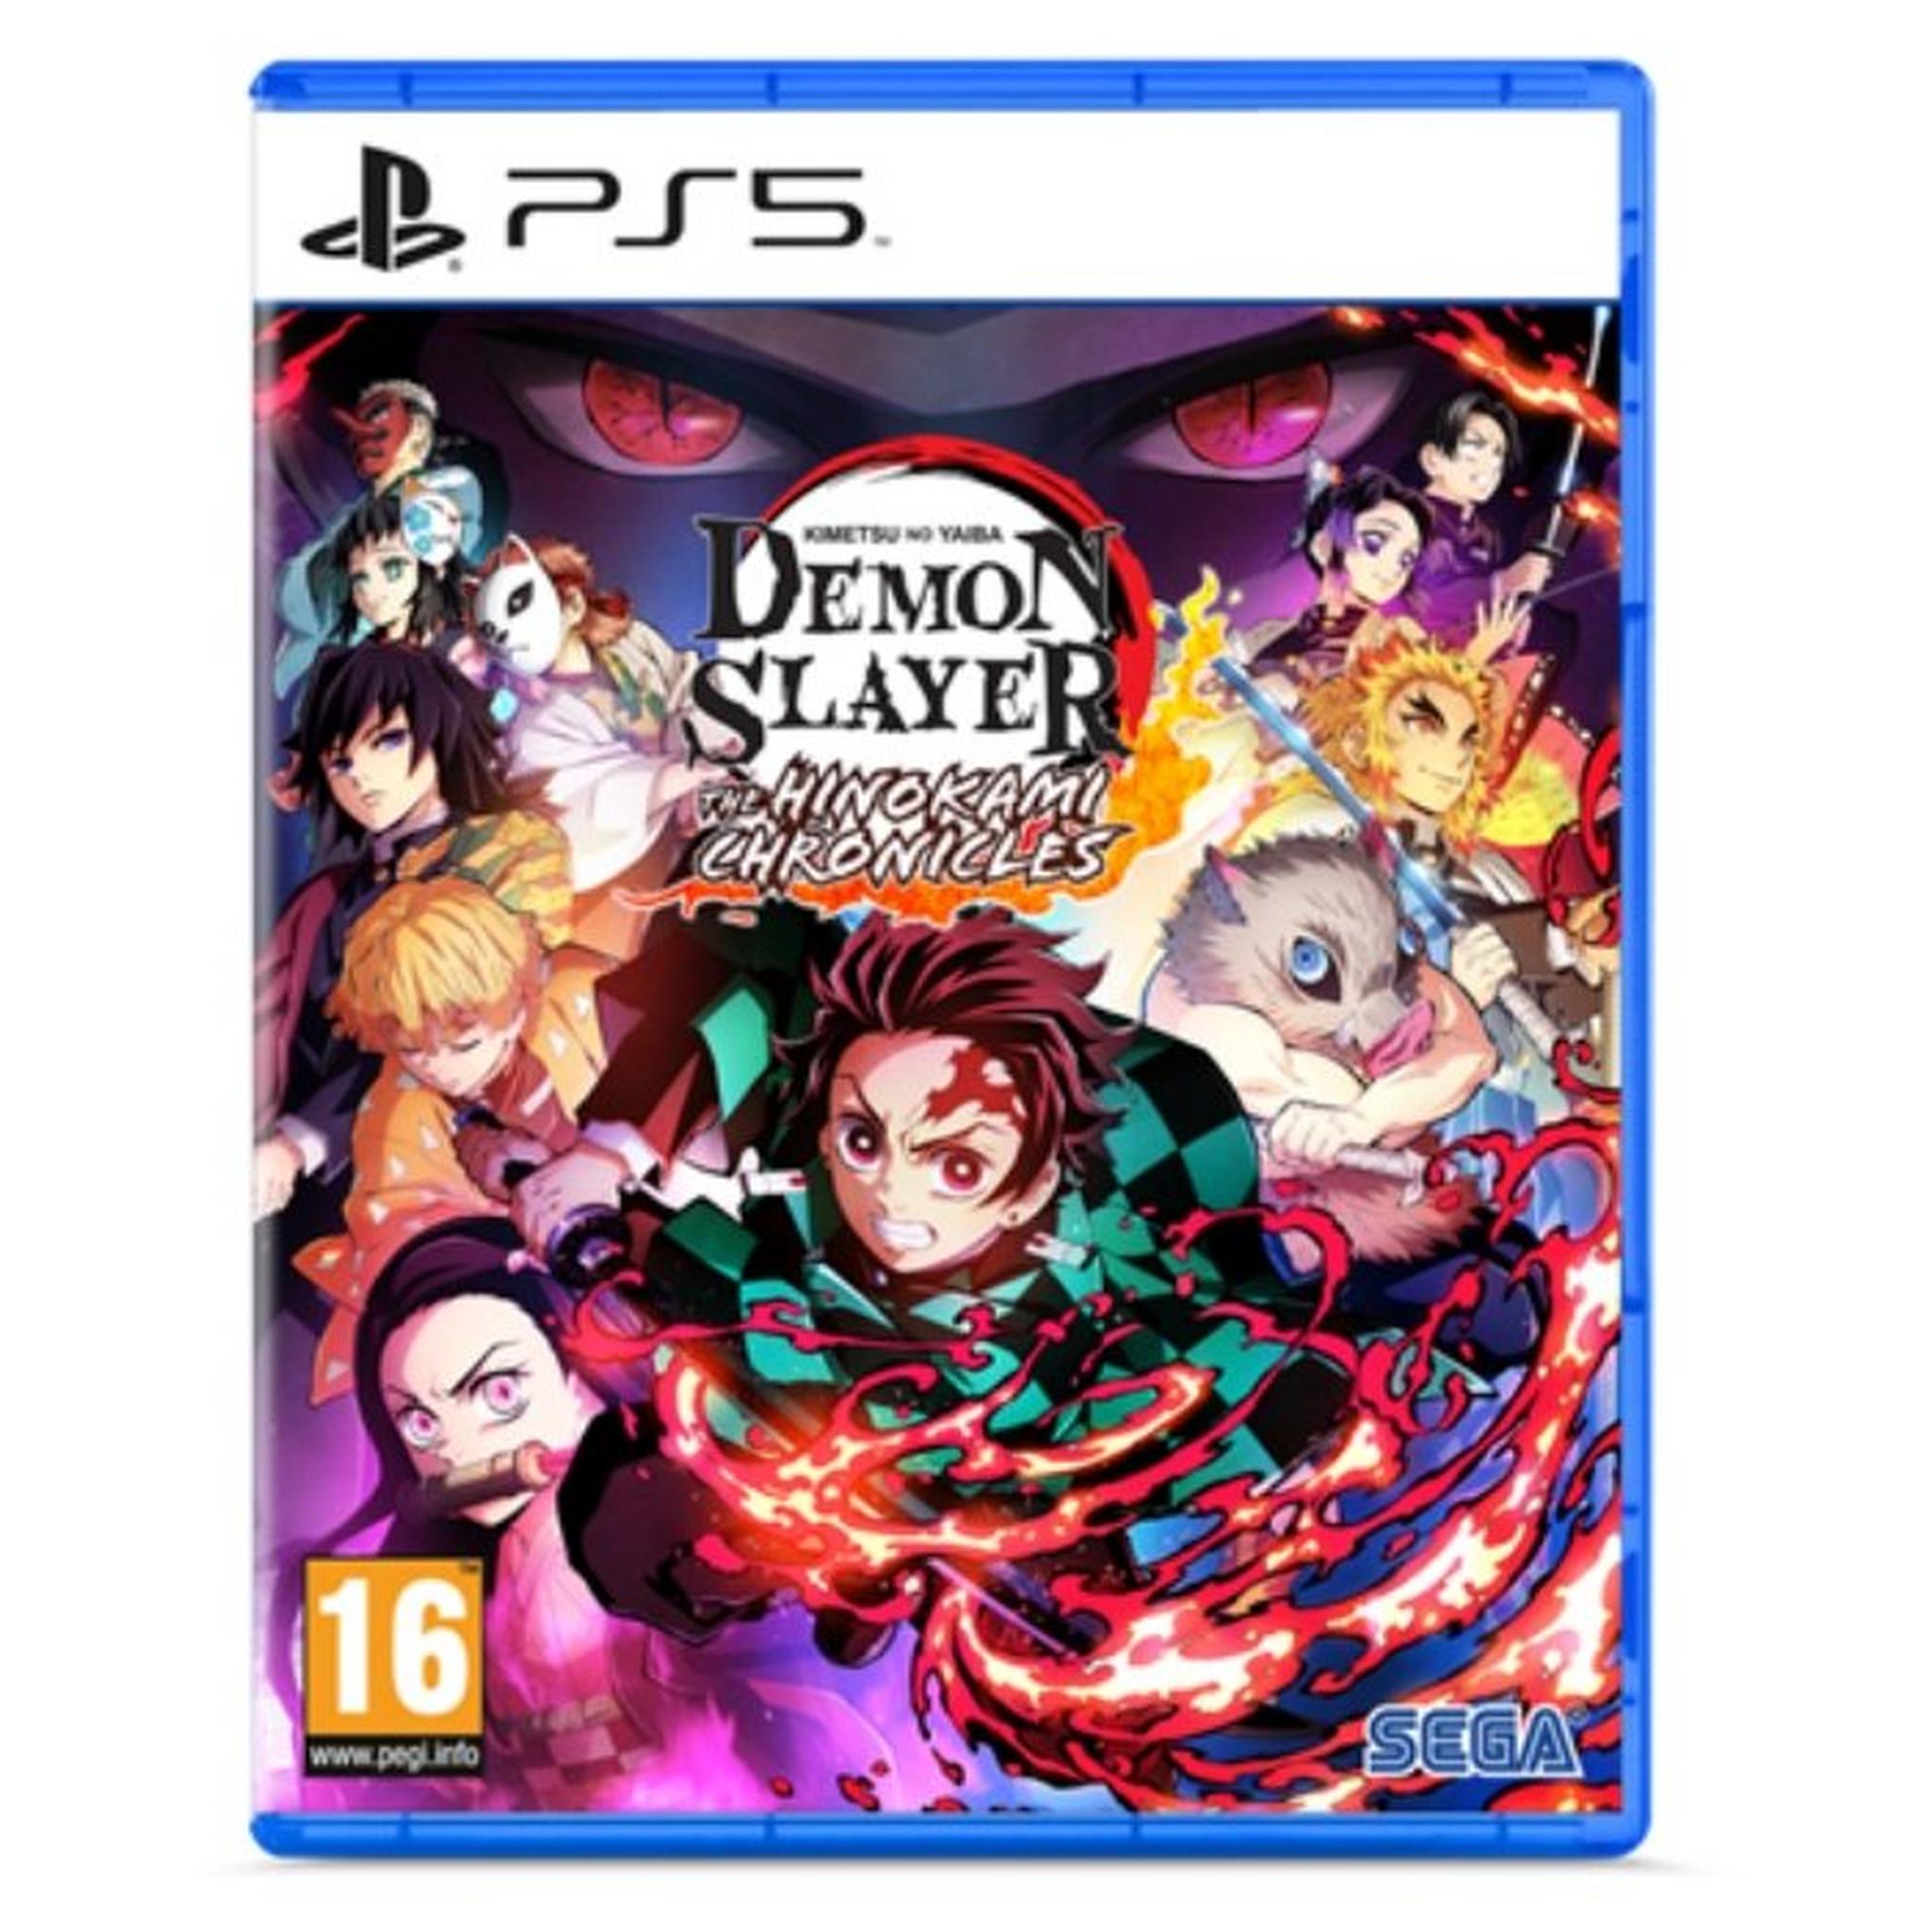 Demon Slayer - Kimetsu no Yaiba: The Hinokami Chronicles - PS4 Game